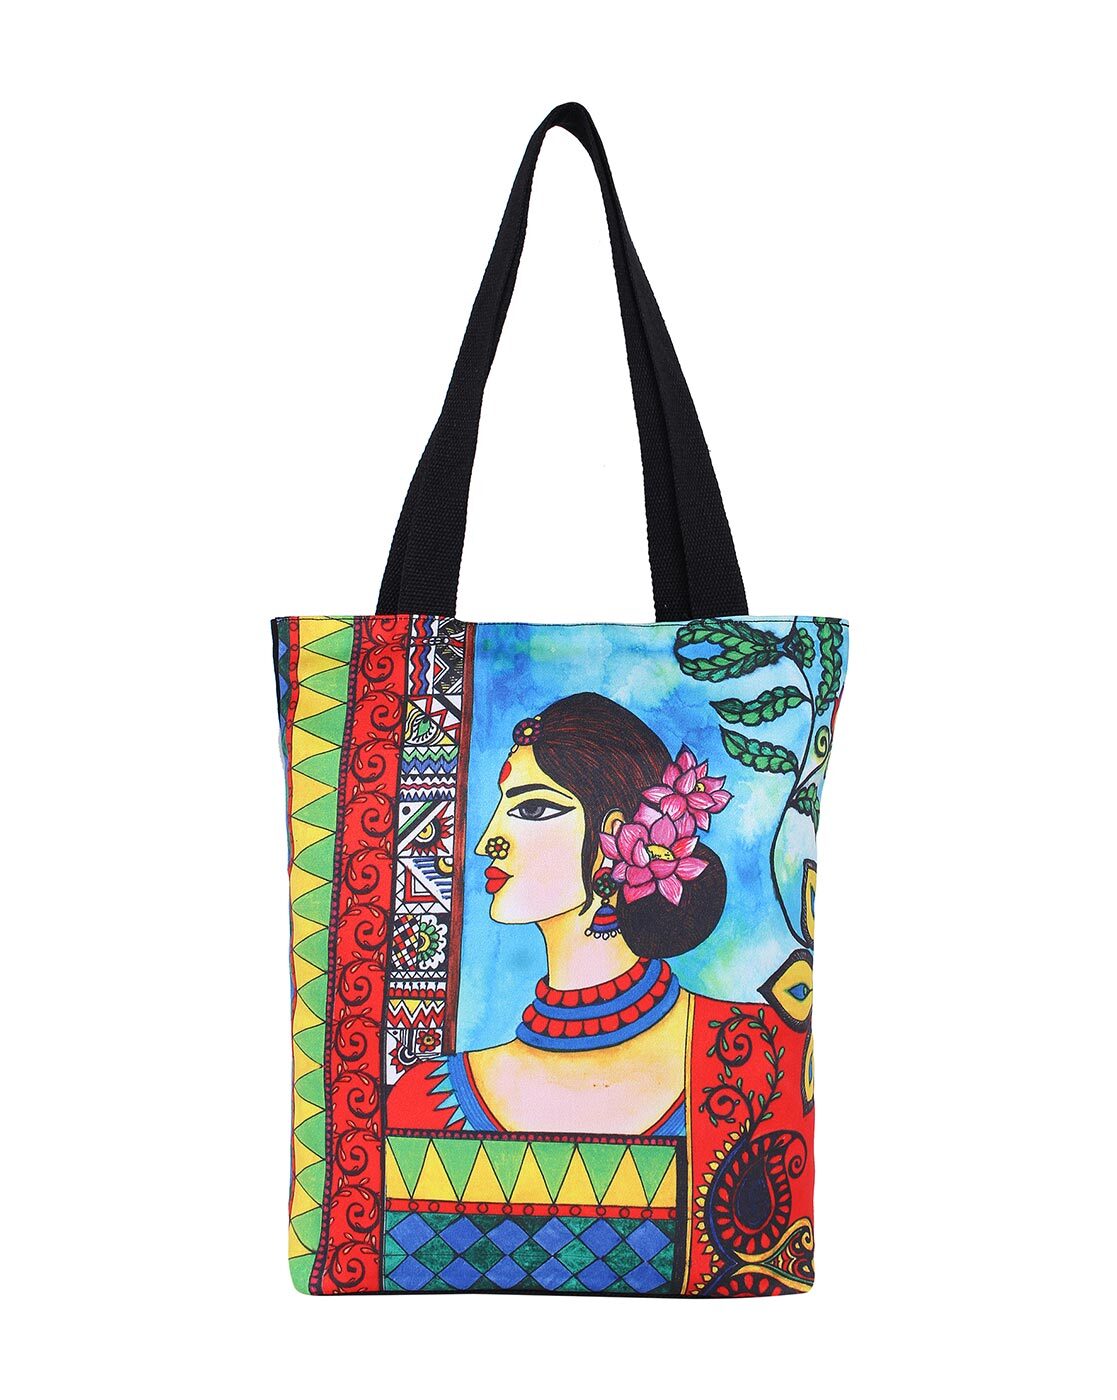 252-25 All things sundar handbag - Bags and Belts Women Accessories | World  Art Community